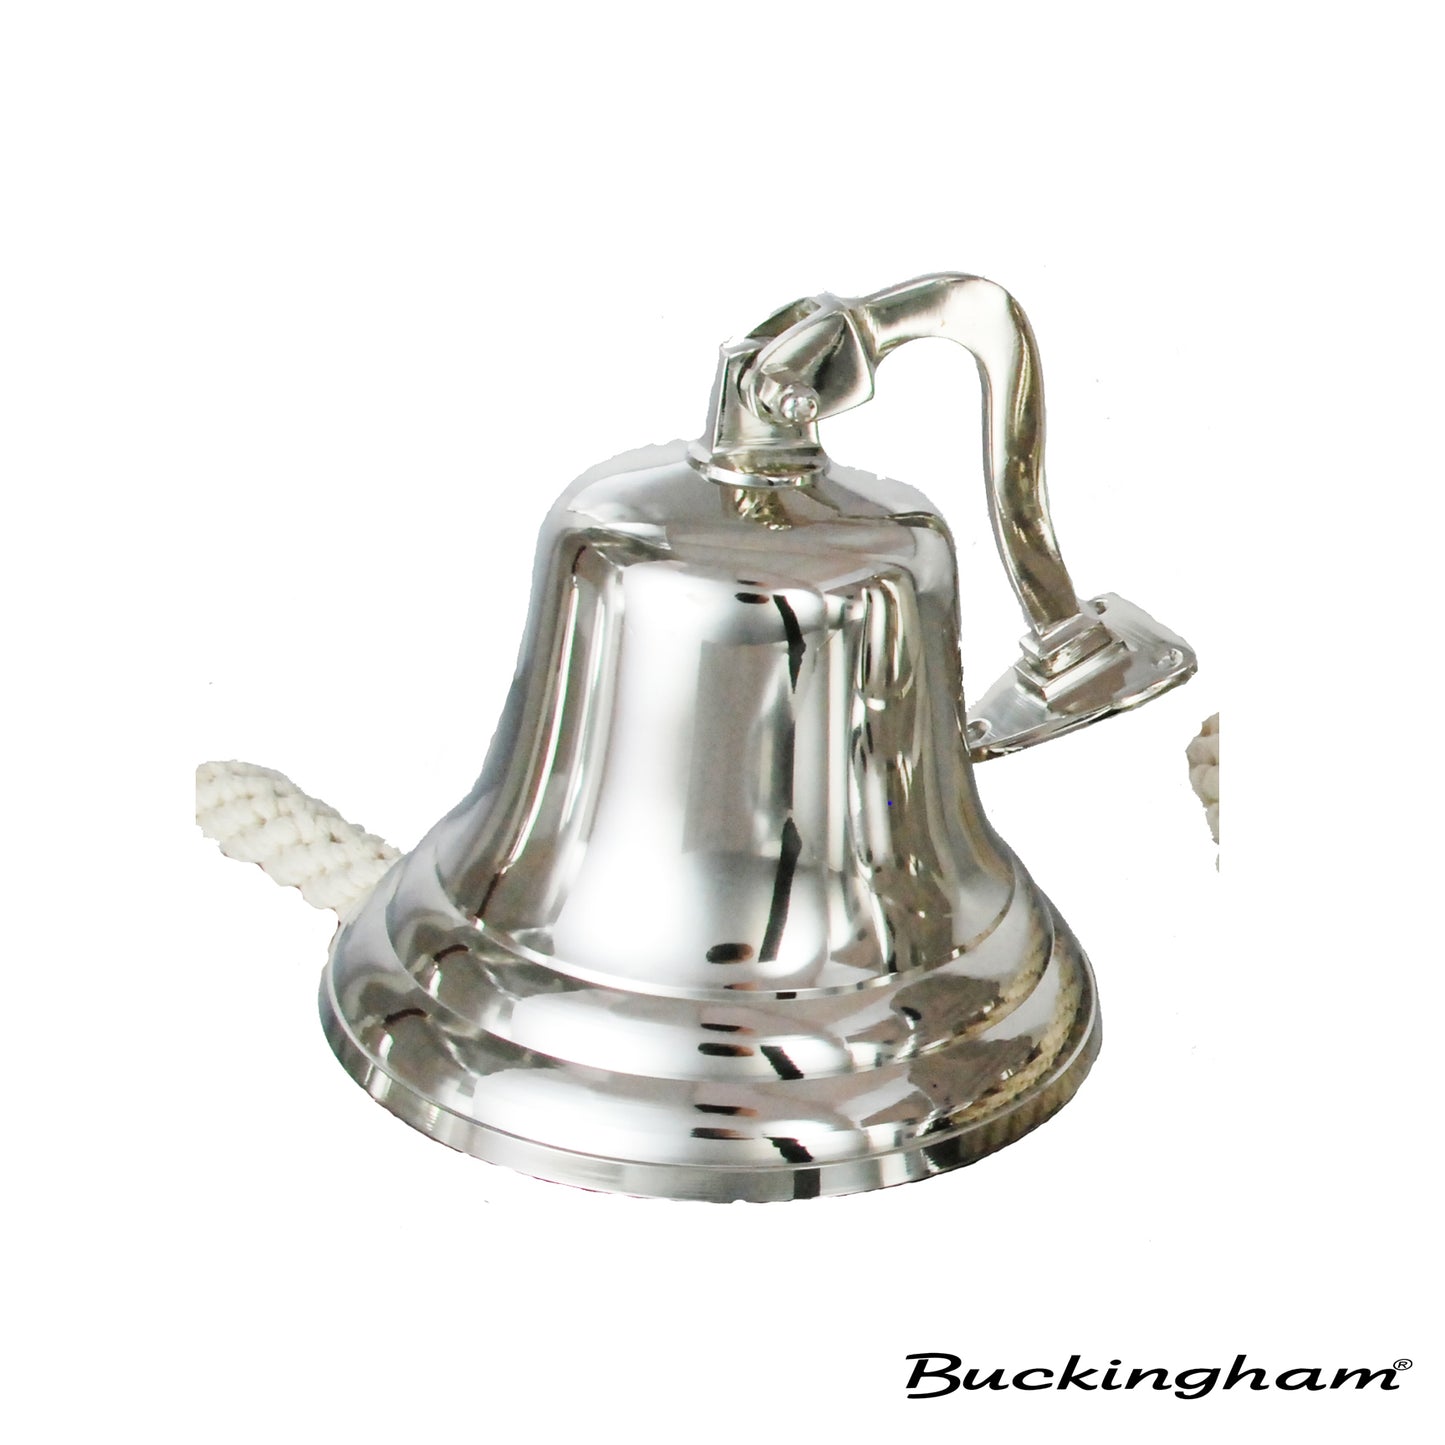 Buckingham Solid Brass Nickel Plated Large Ship Bell Pub Door Last Order School Dinner Nautical Bell 6 " / 15 cm